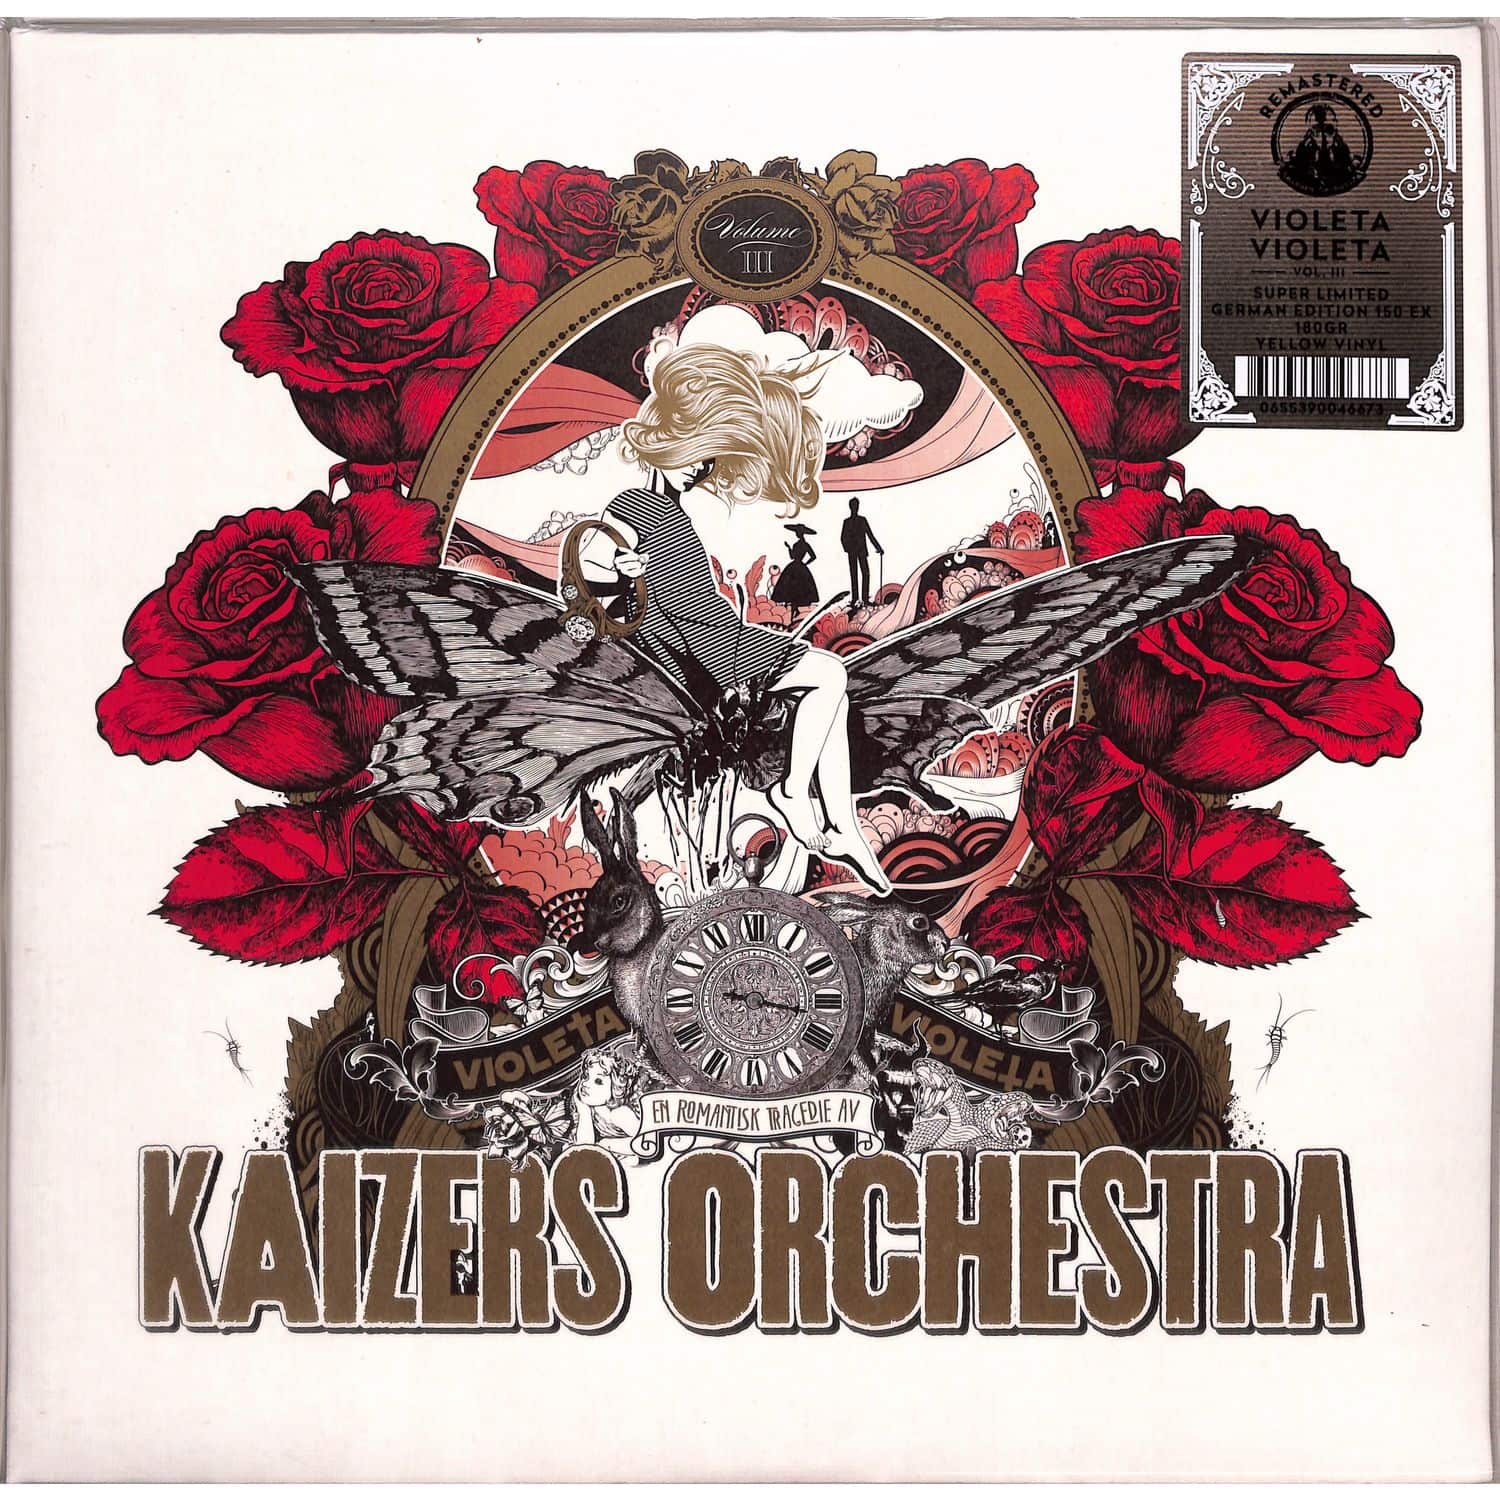 Kaizers Orchestra - VIOLETA VIOLETA III 